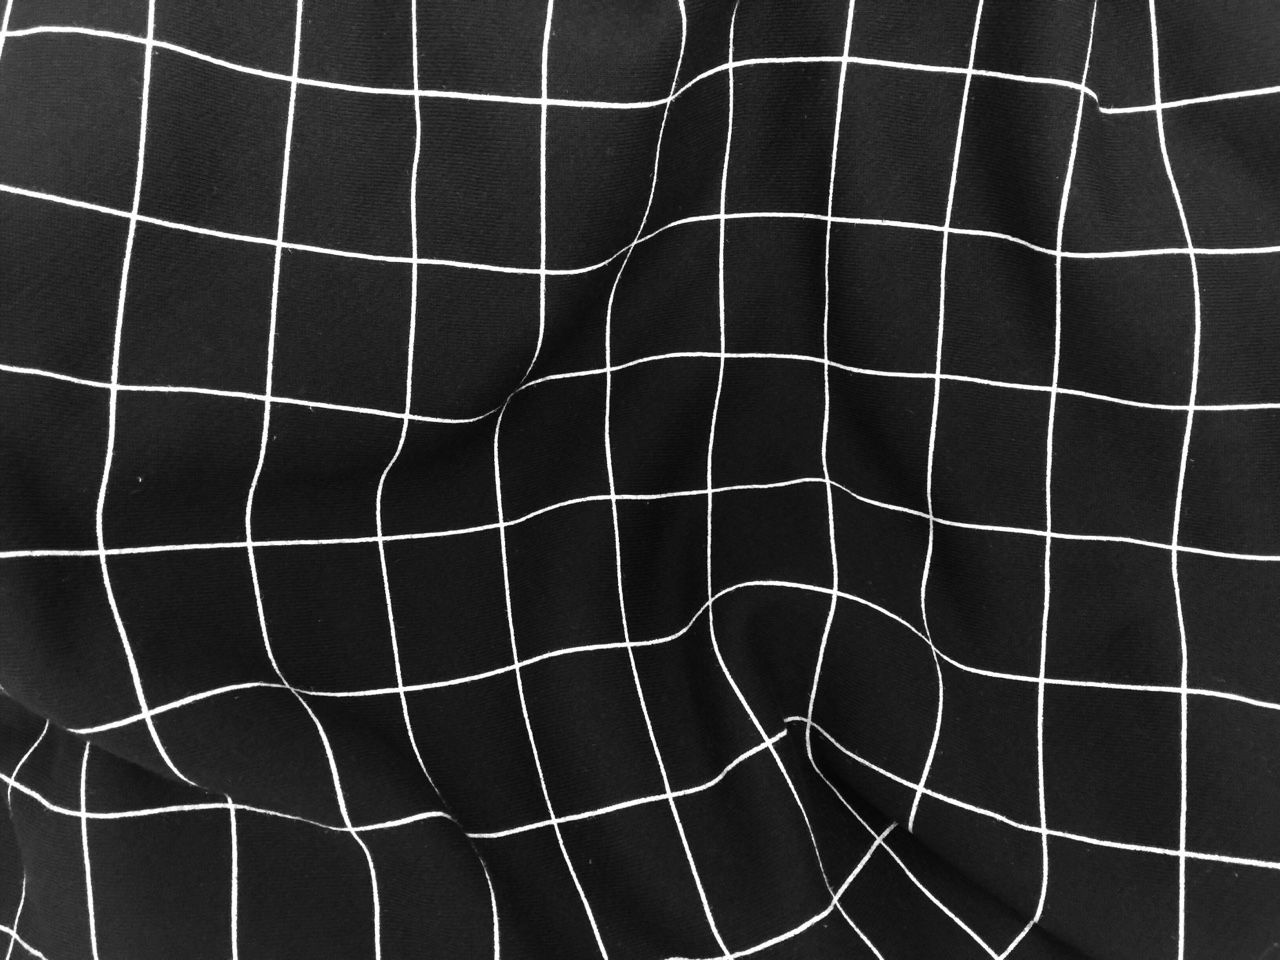 Aesthetic Tumblr Grid Wallpapers